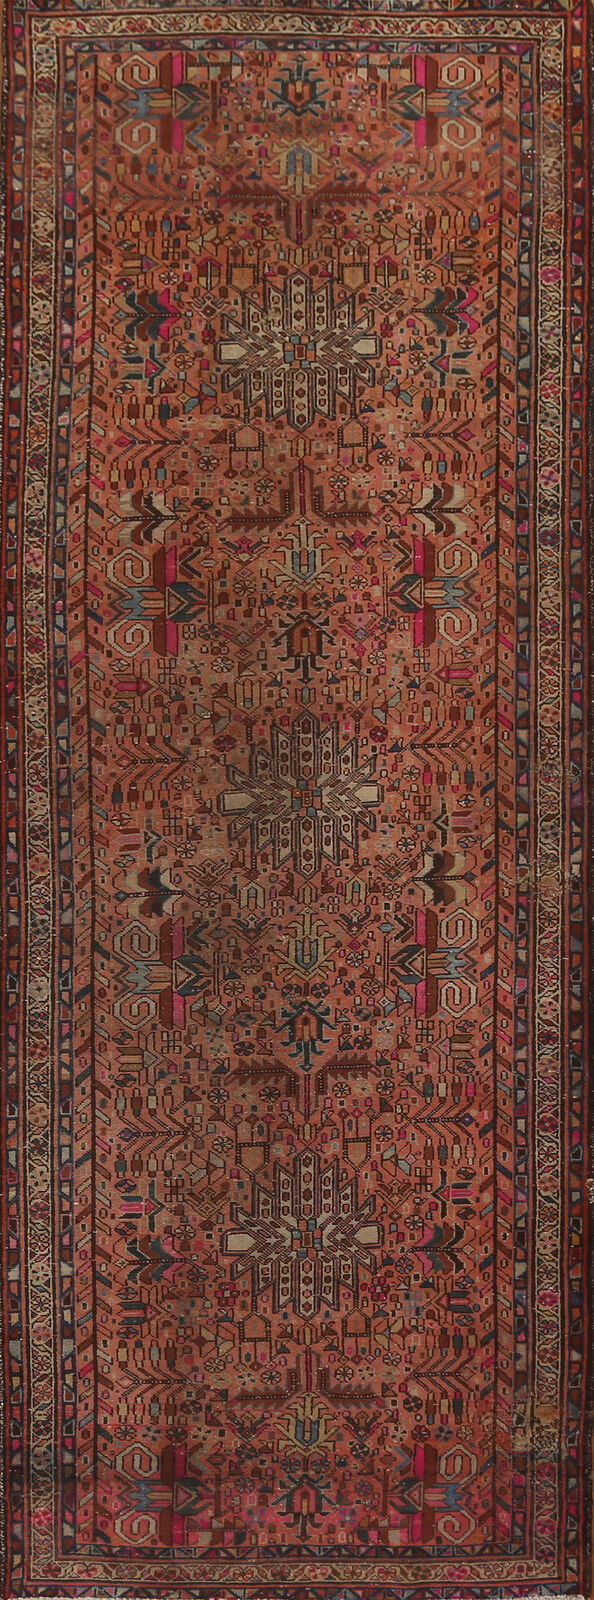 Tribal Geometric Hamedan Runner Rug 4x11 Vintage Hand-knotted Hallway Carpet